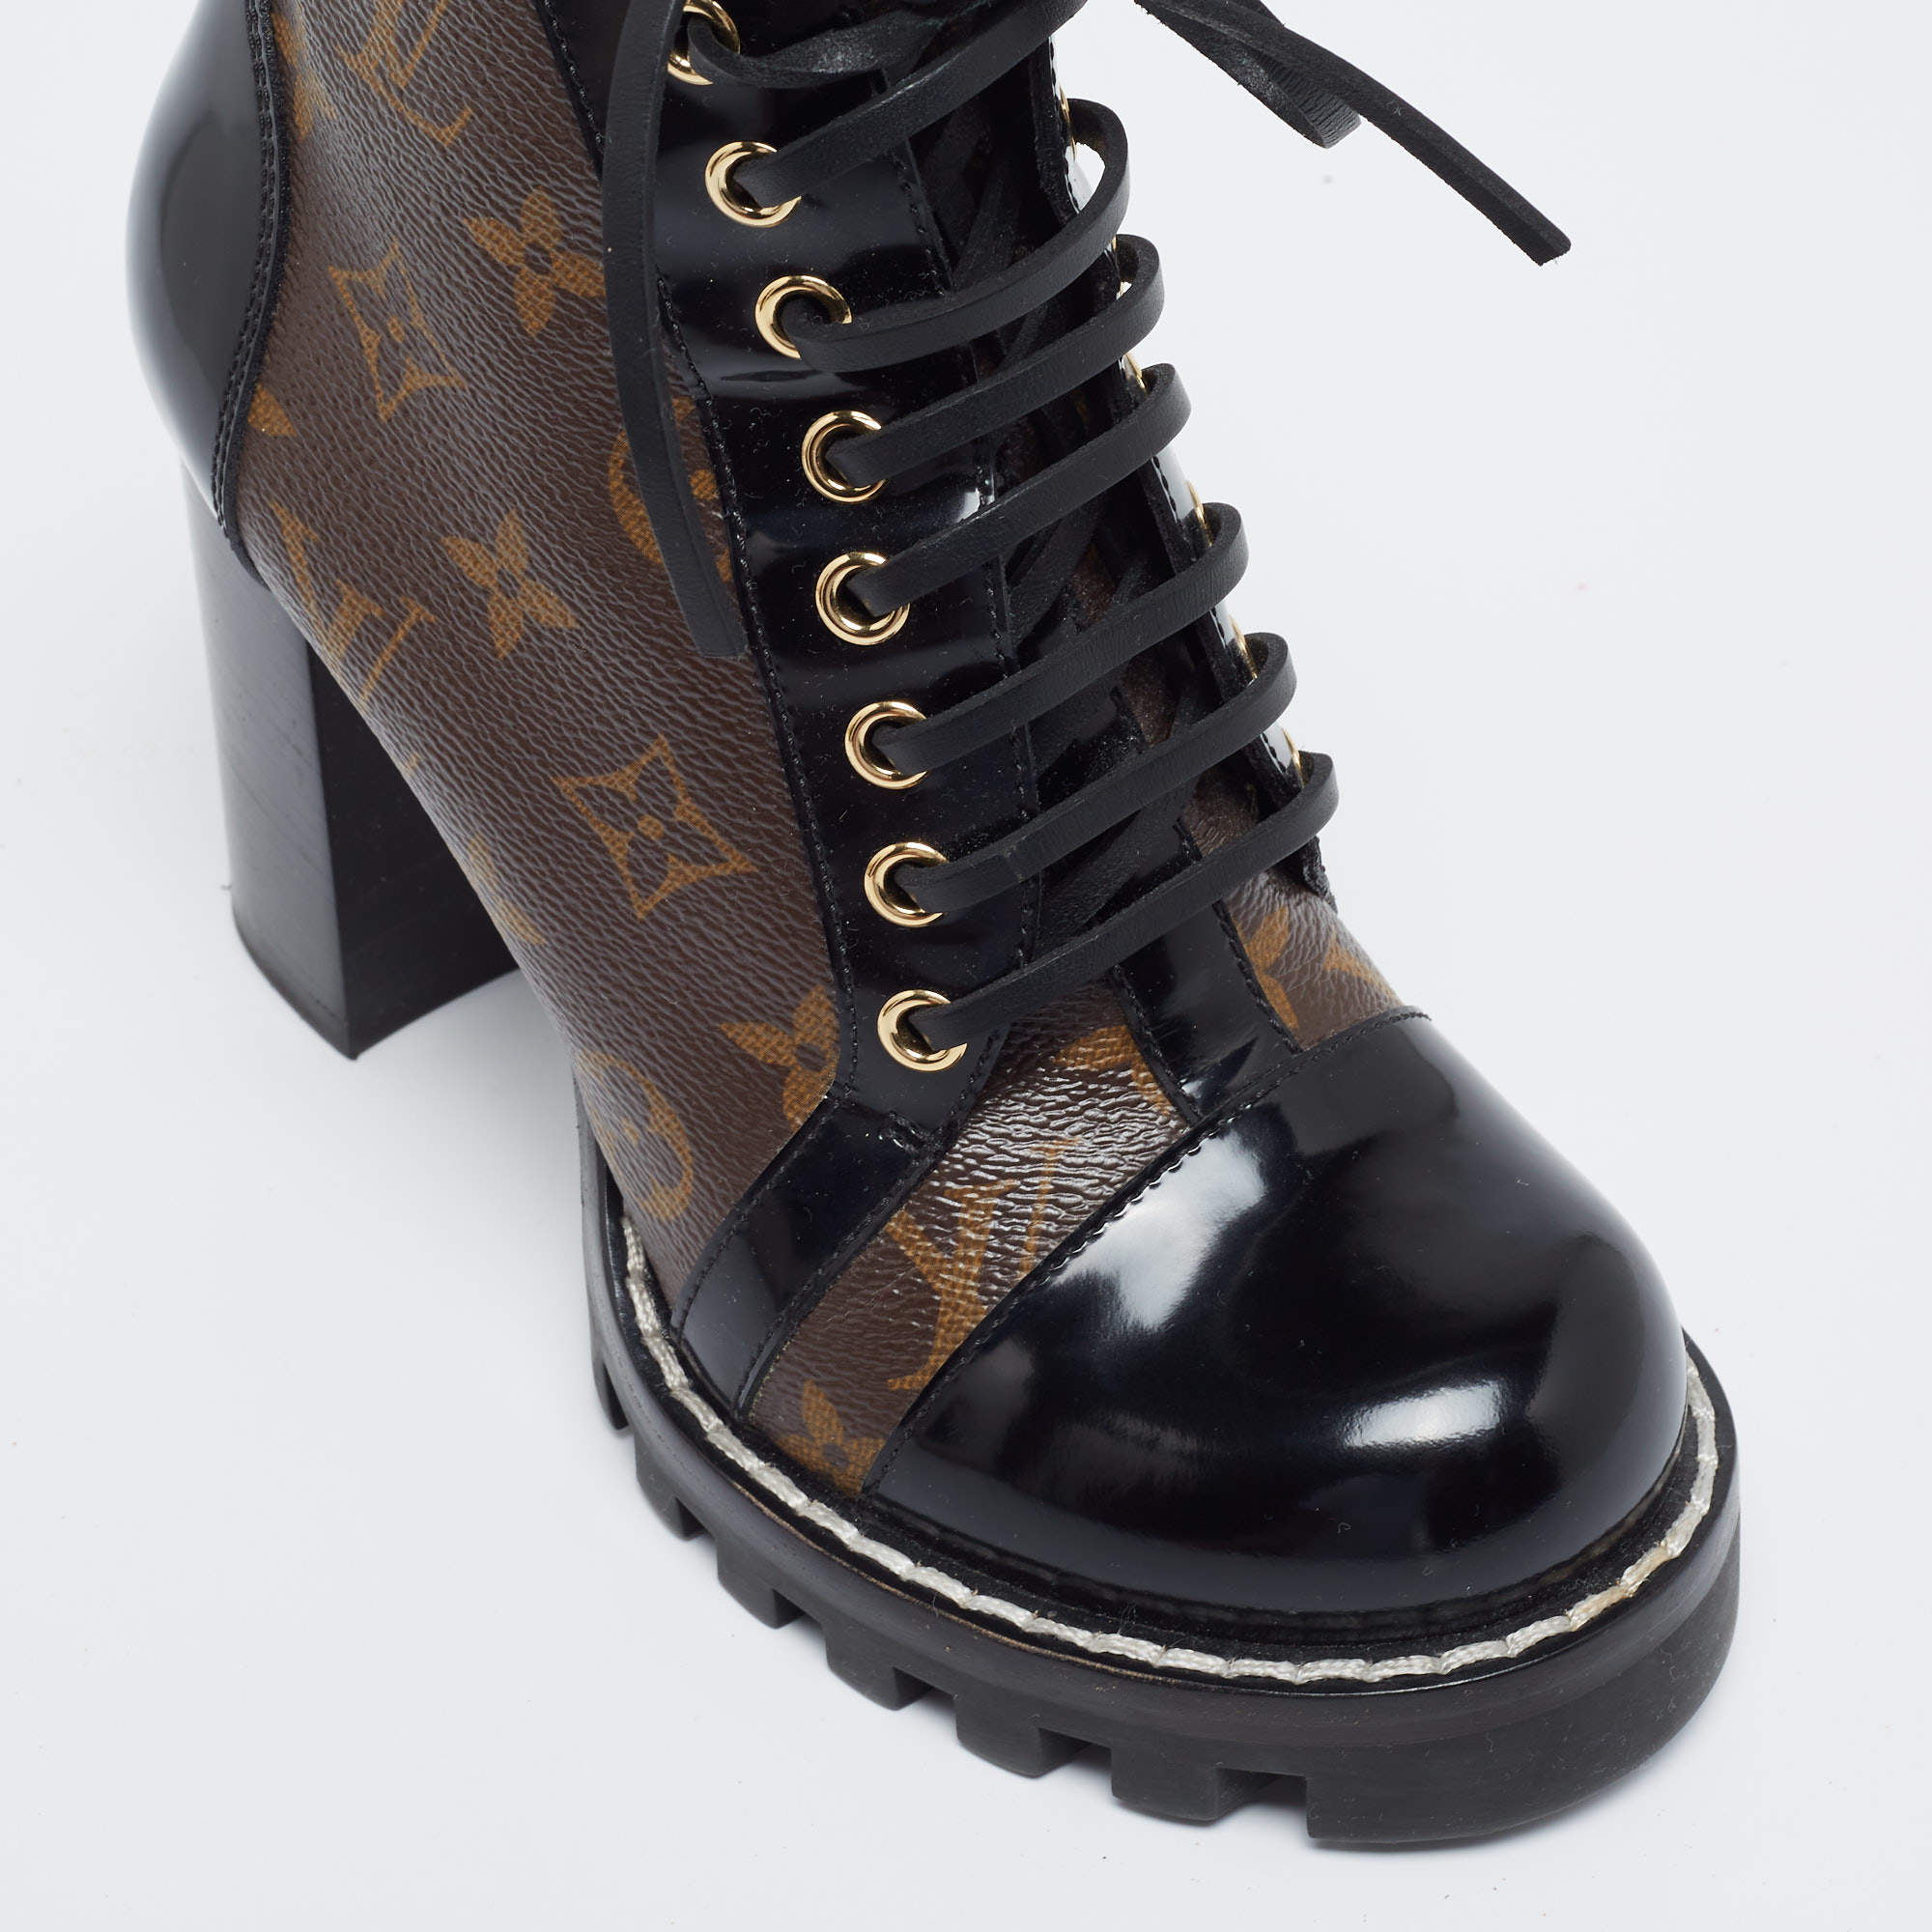 Louis Vuitton Monogram Star Ankle Boots Boots Brown x Black P13901